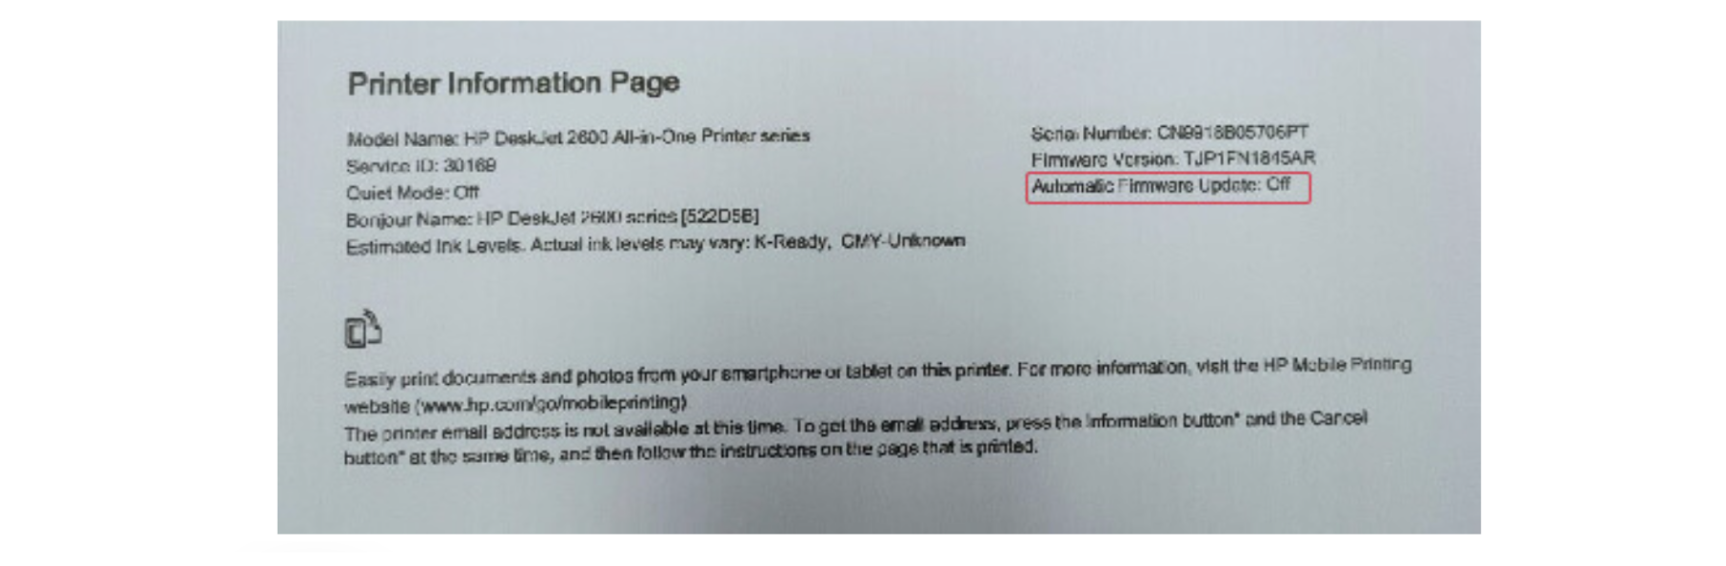 Printer Information Page